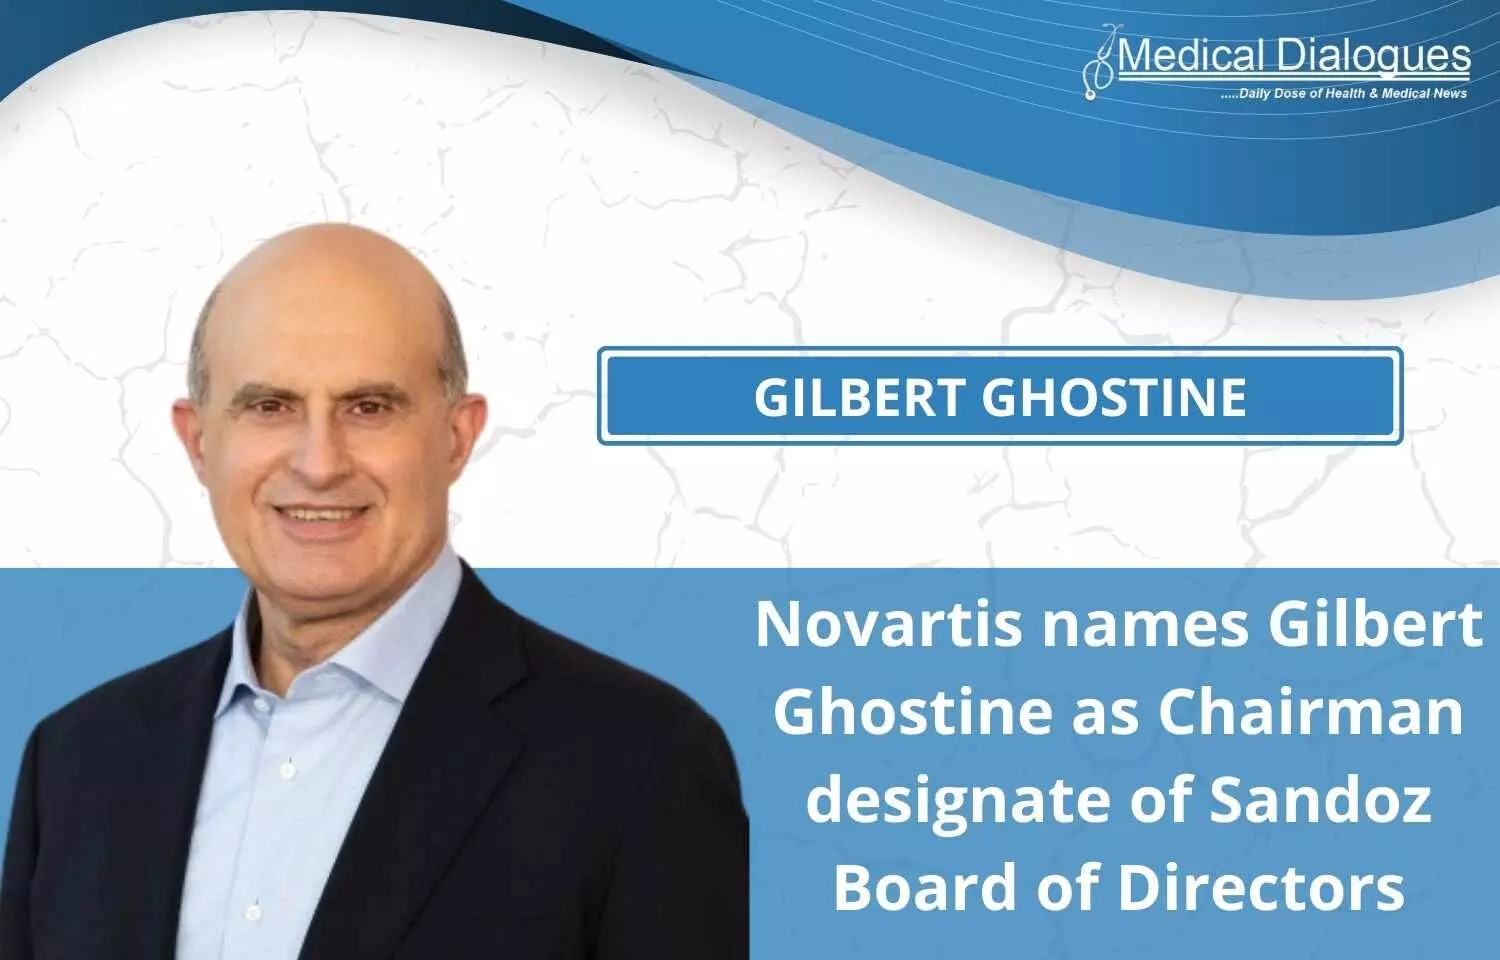 Novartis names Gilbert Ghostine as Chairman designate of Sandoz Board of Directors